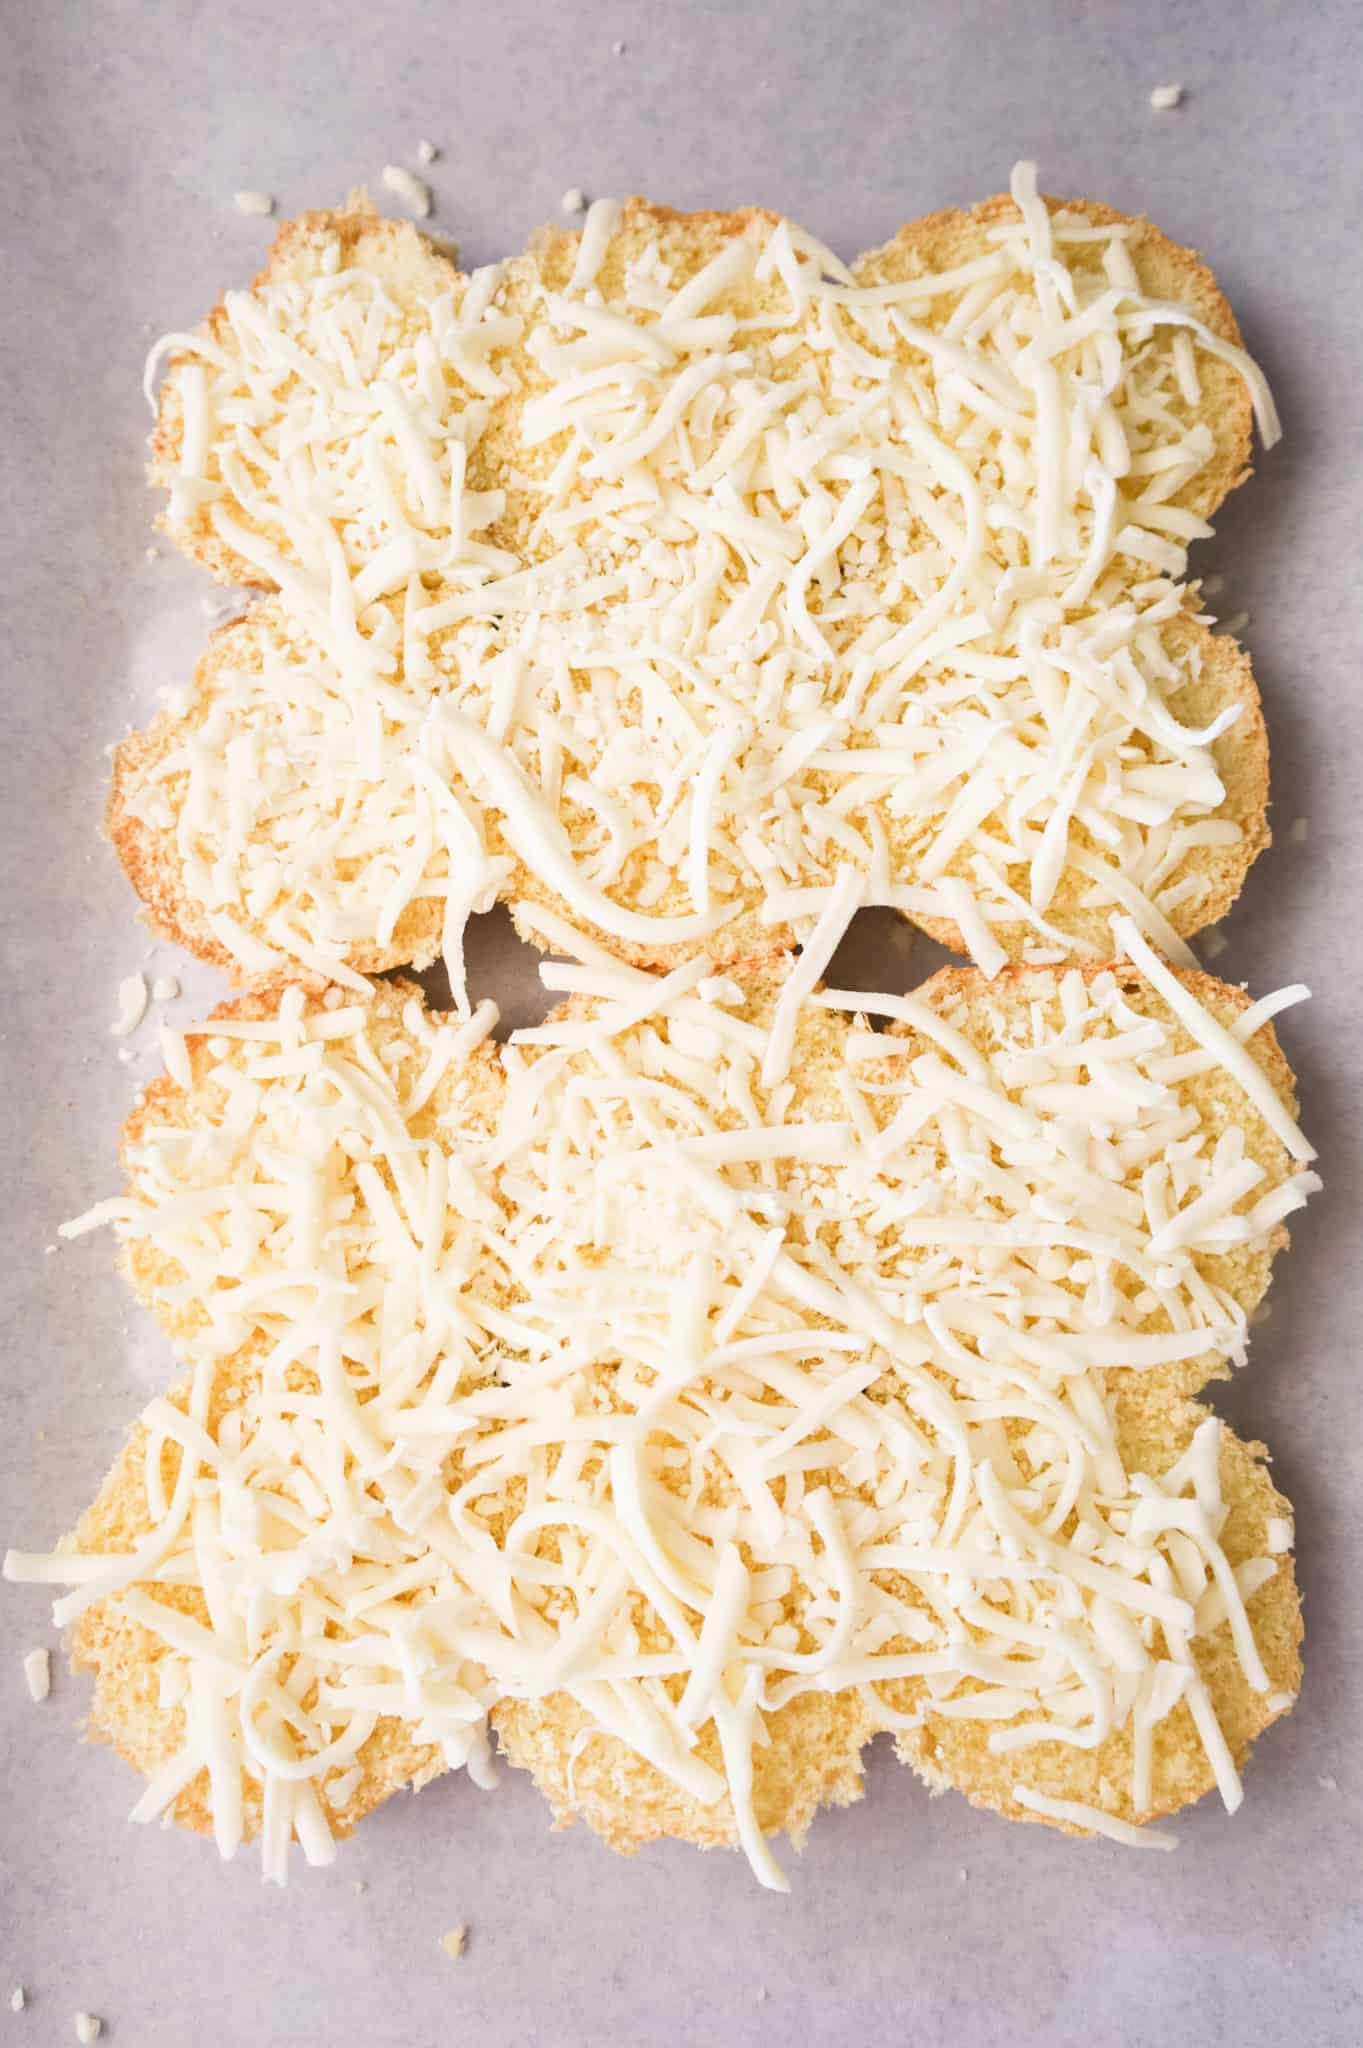 shredded mozzarella on buns on a baking sheet